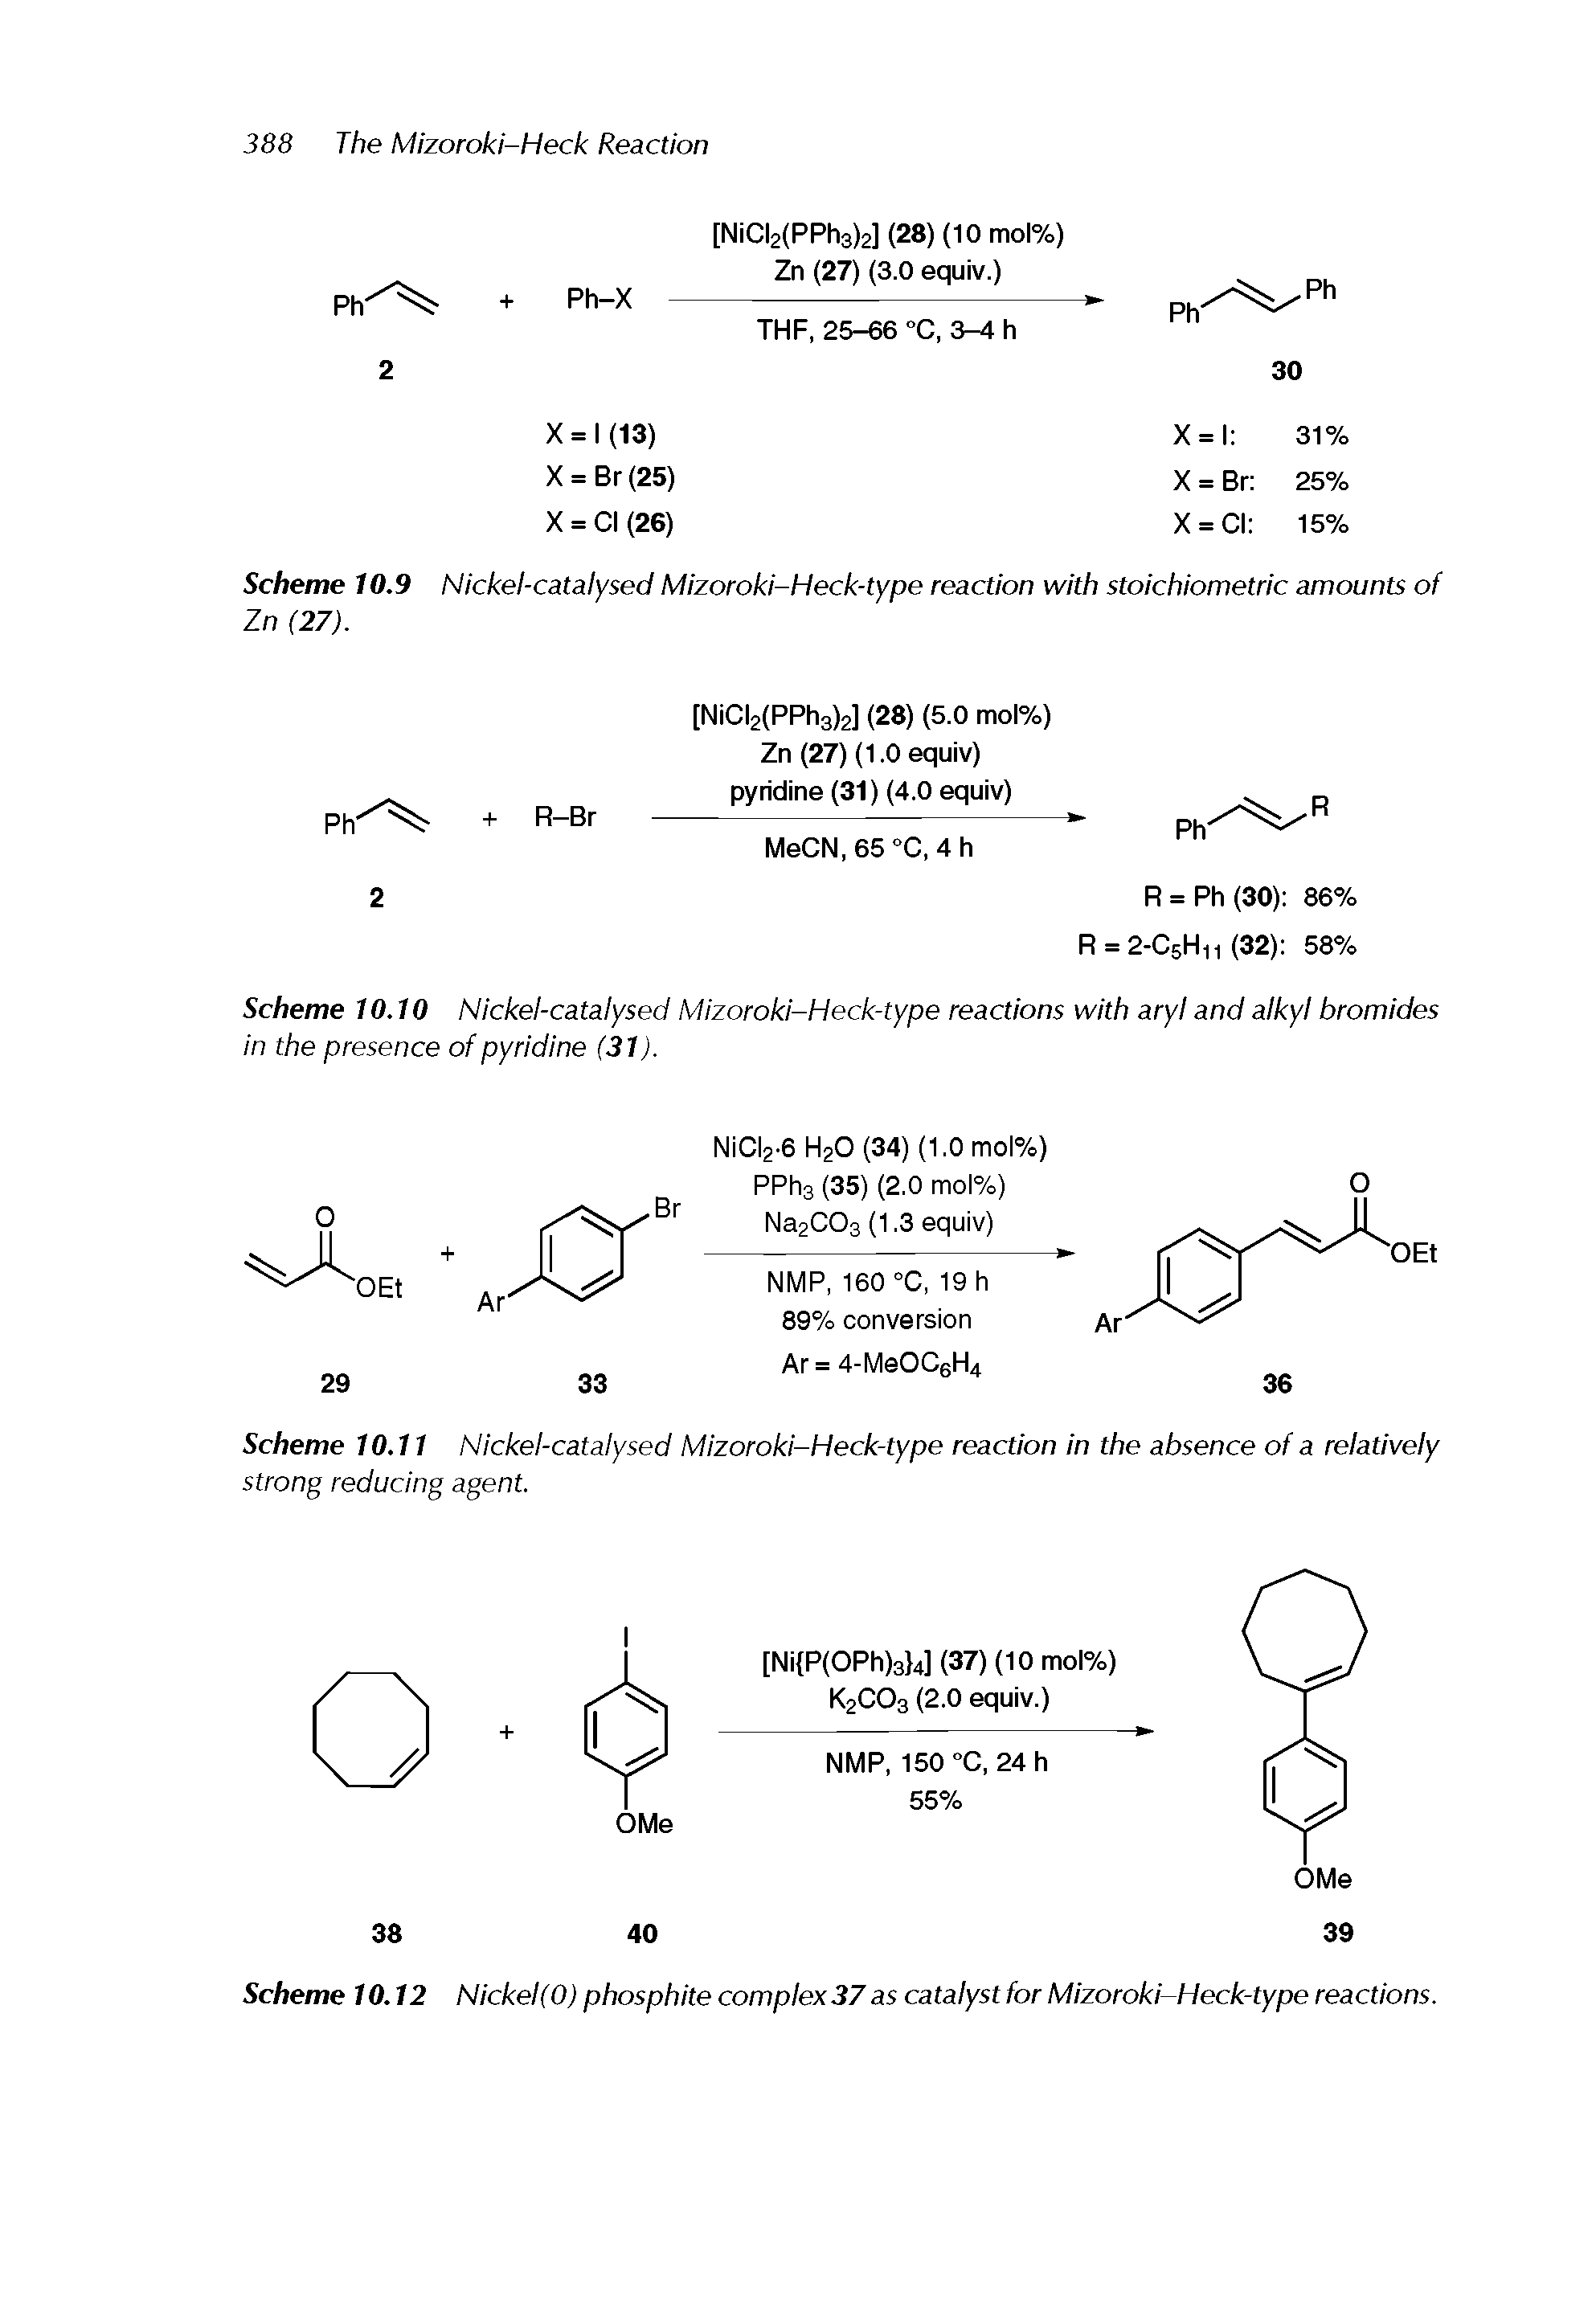 Scheme 10.9 Nickel-catalysed MIzoroki-Heck-type reaction with stoichiometric amounts of Zn (27).